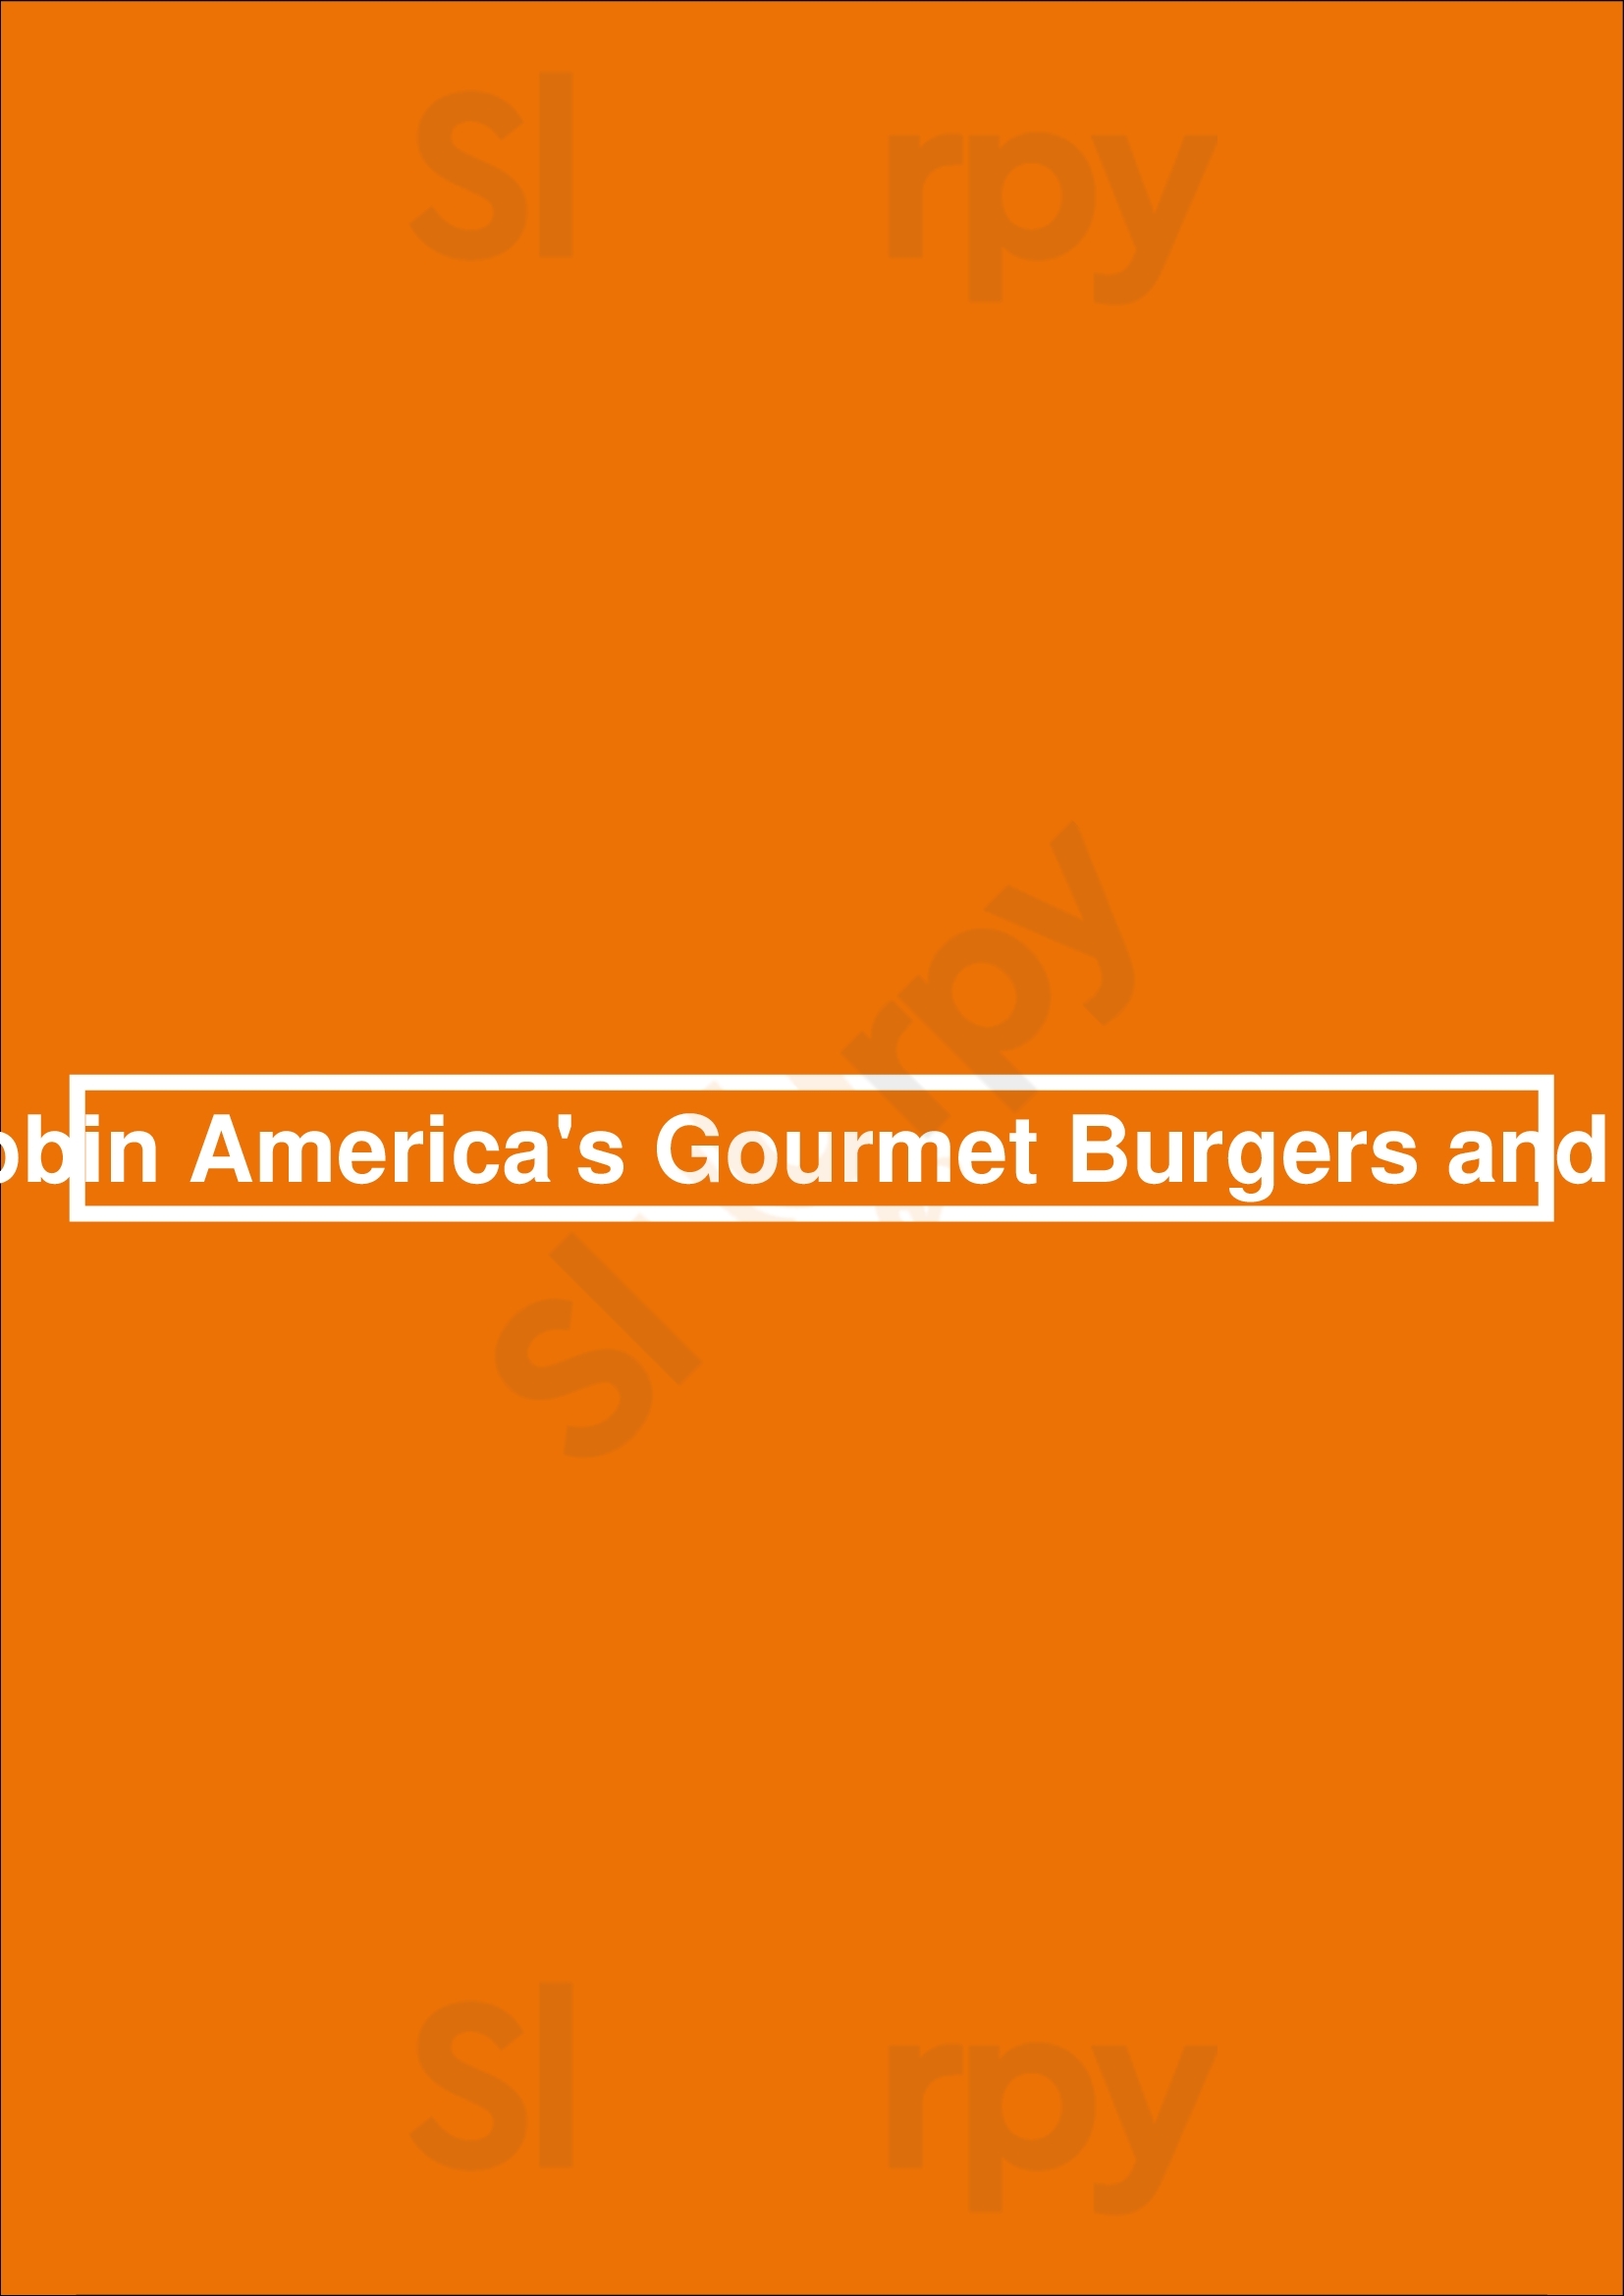 Red Robin America's Gourmet Burgers And Spirits Columbus Menu - 1